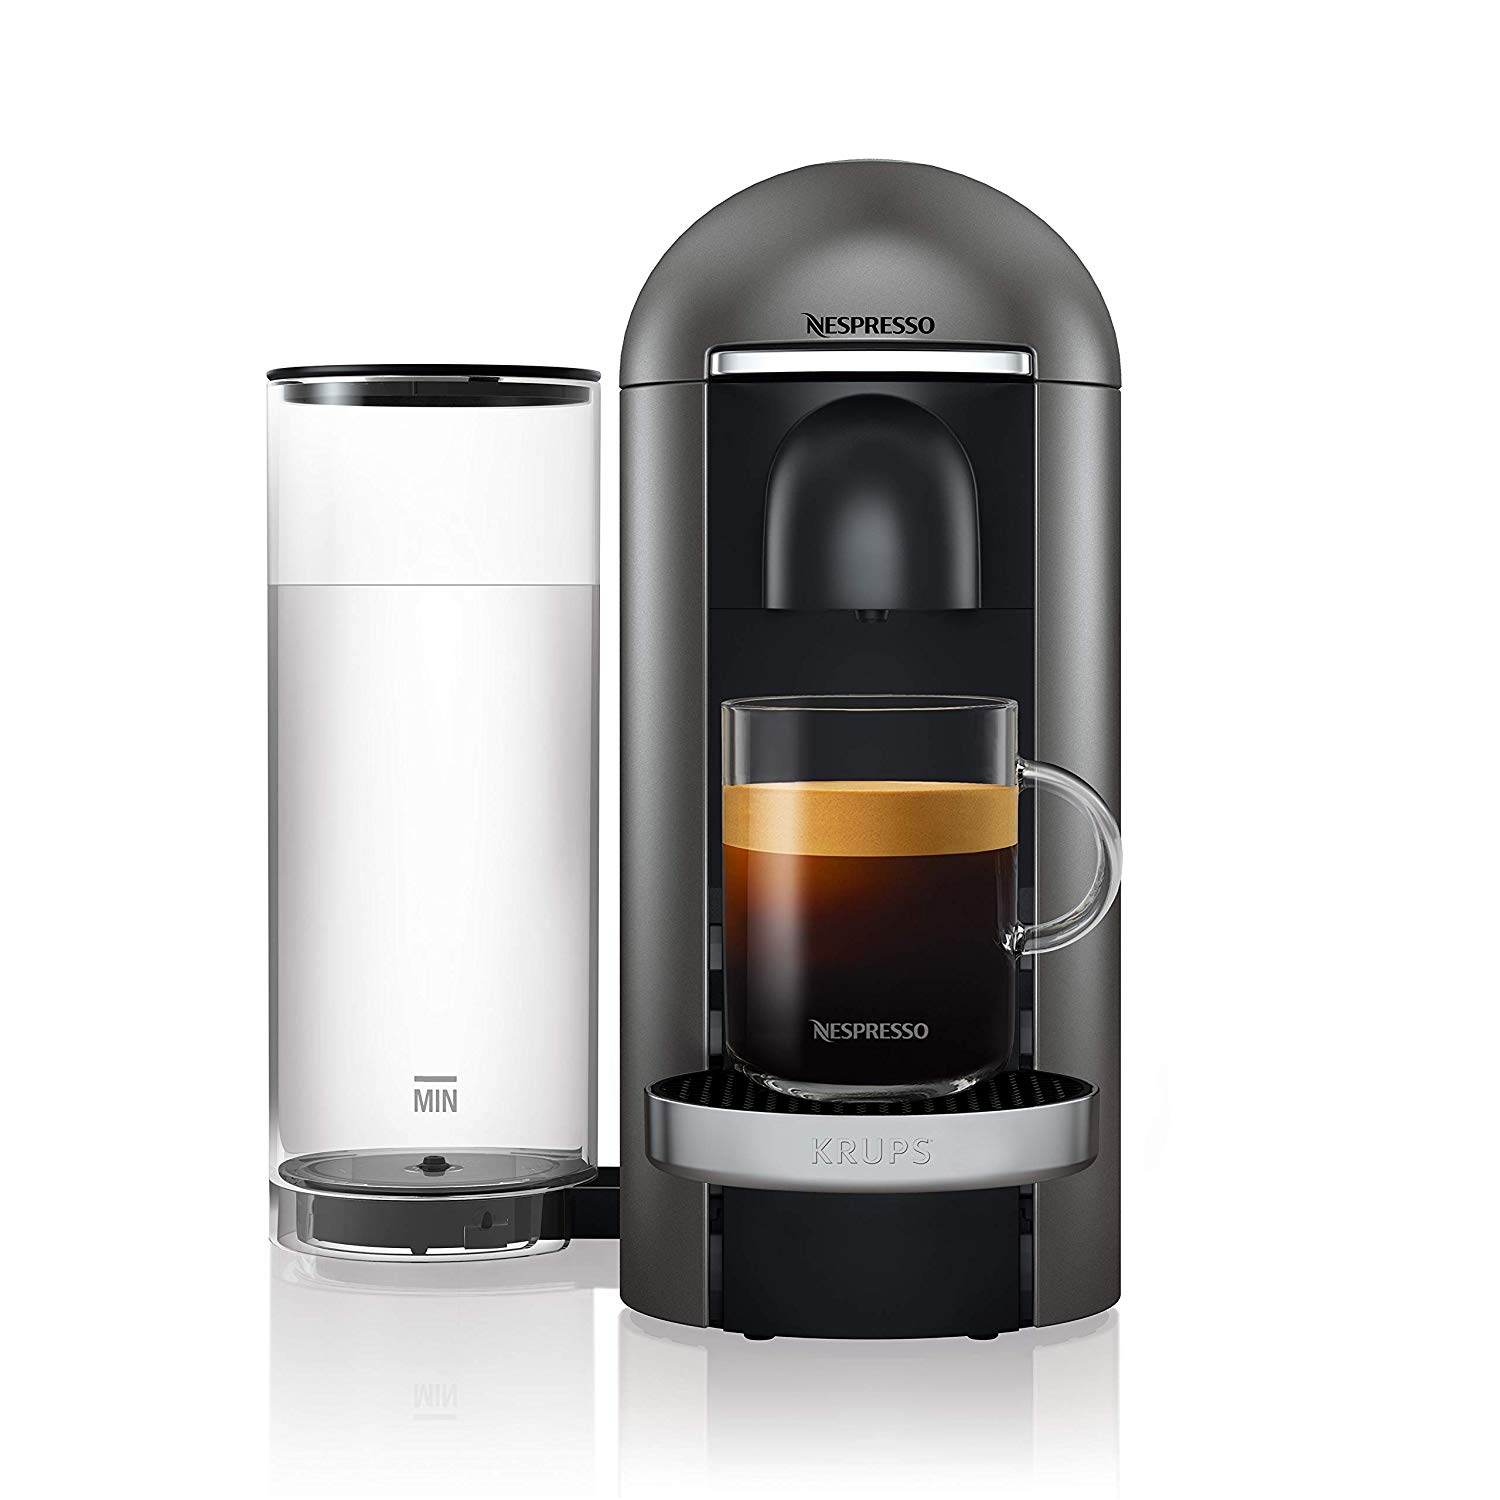 Krups Nespresso Vertuo Plus Coffee Capsule Machine